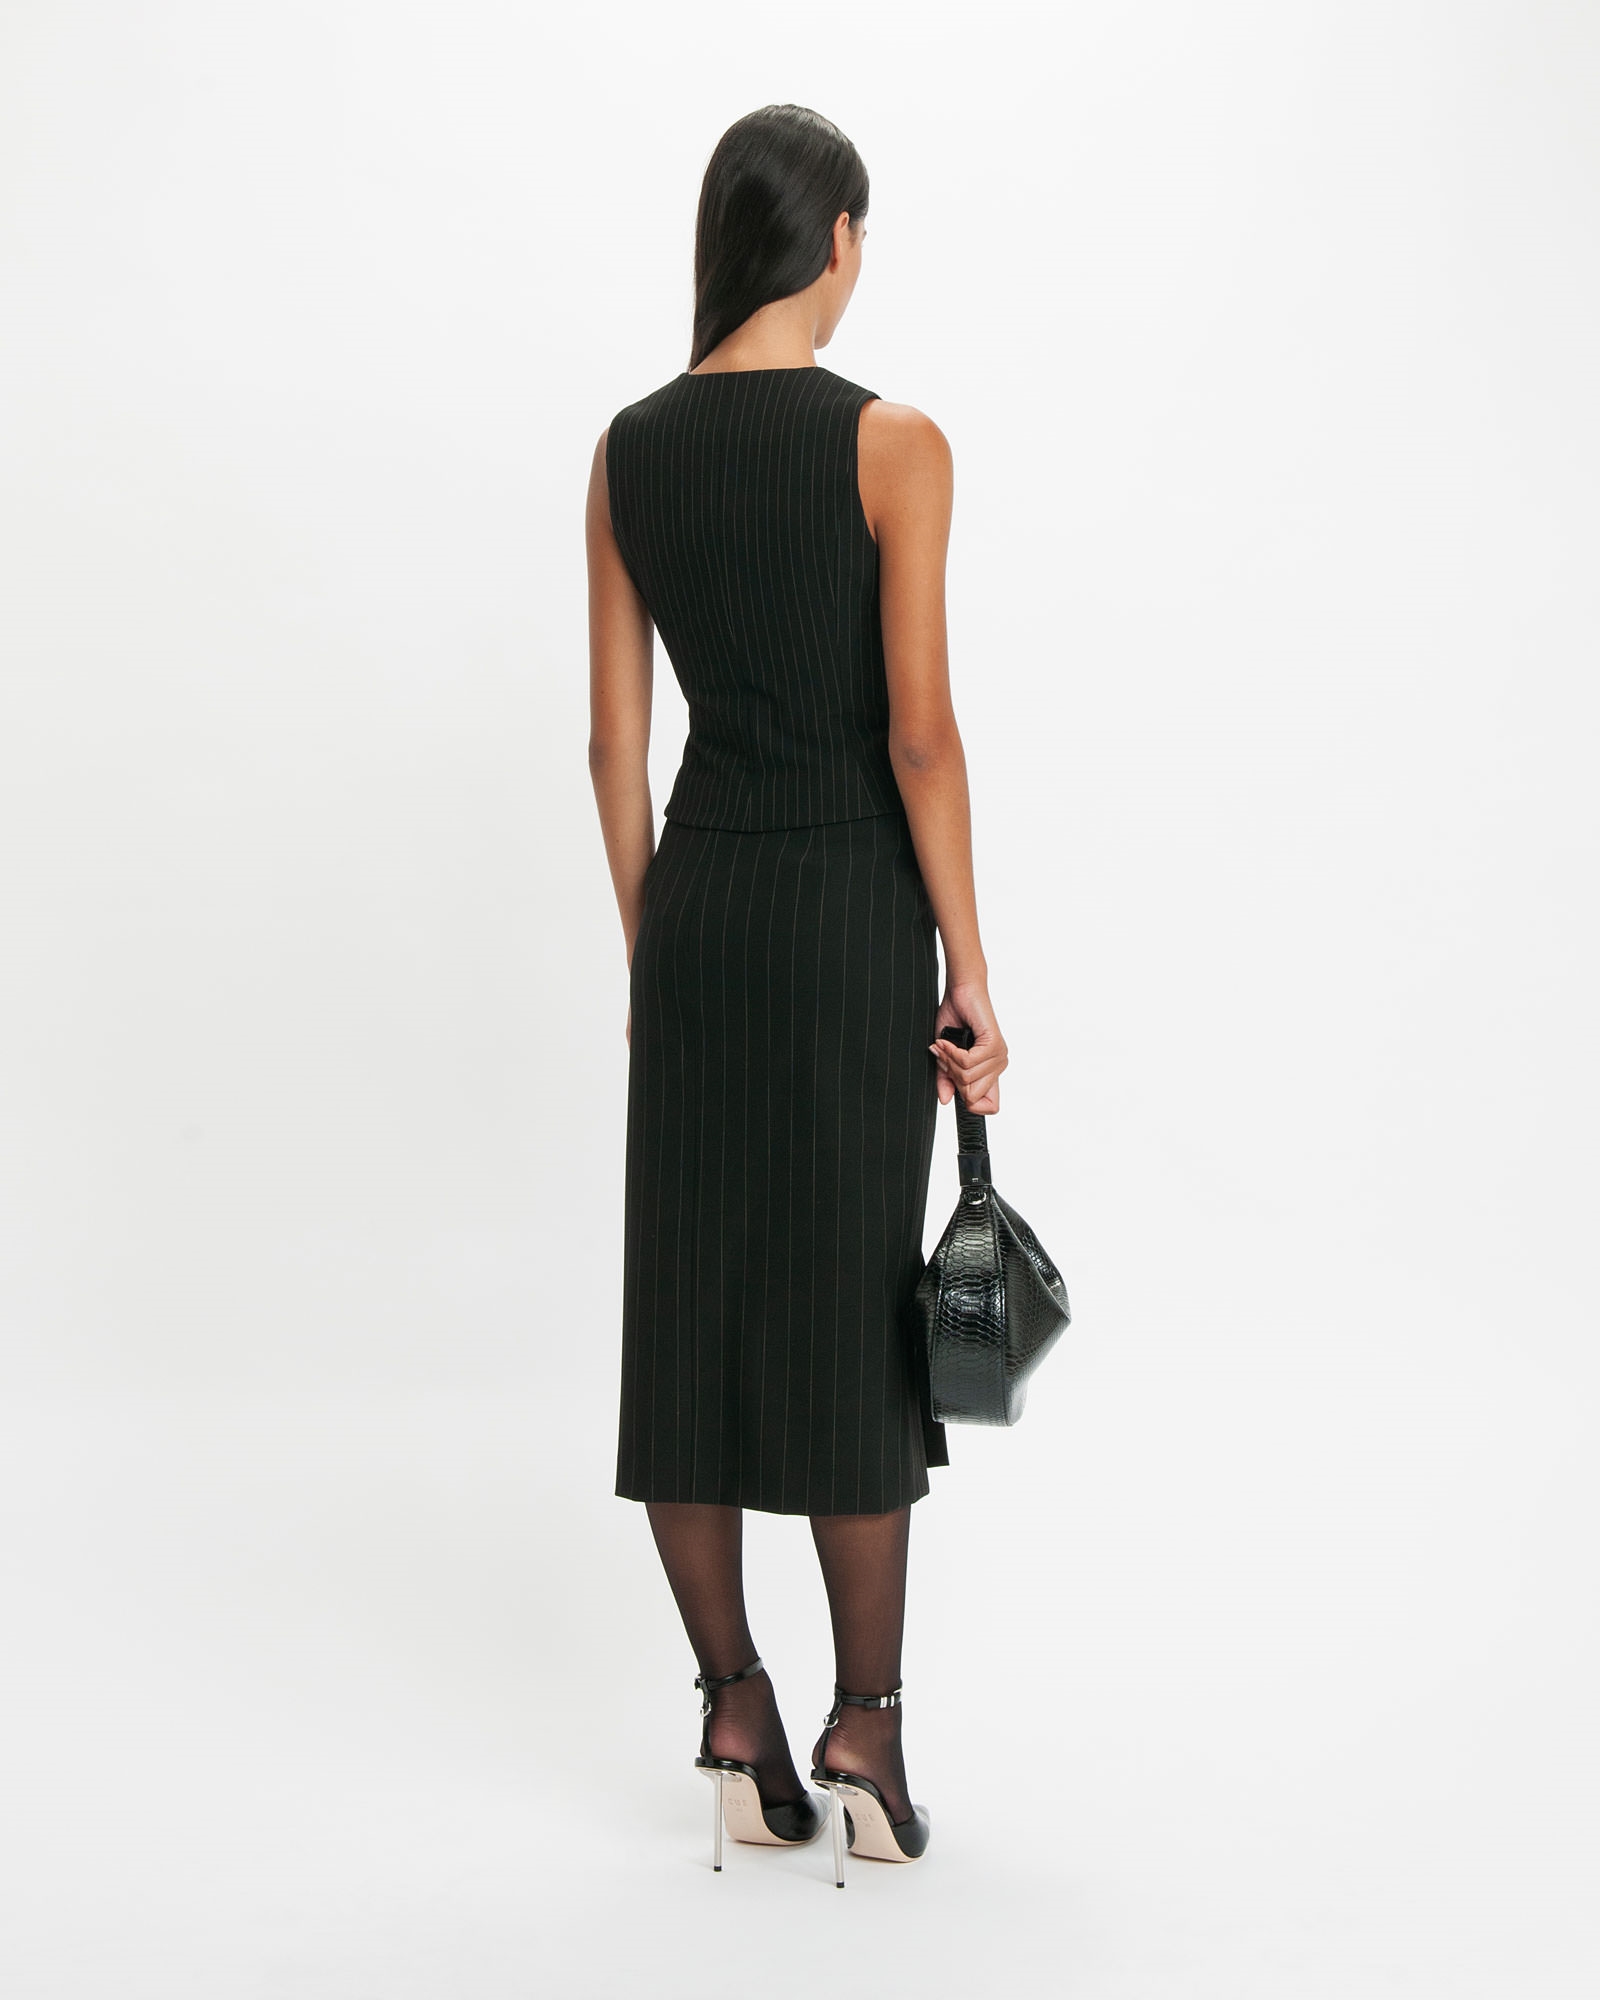 Skirts | Contrast Pinstripe Midi Skirt | 990 Black